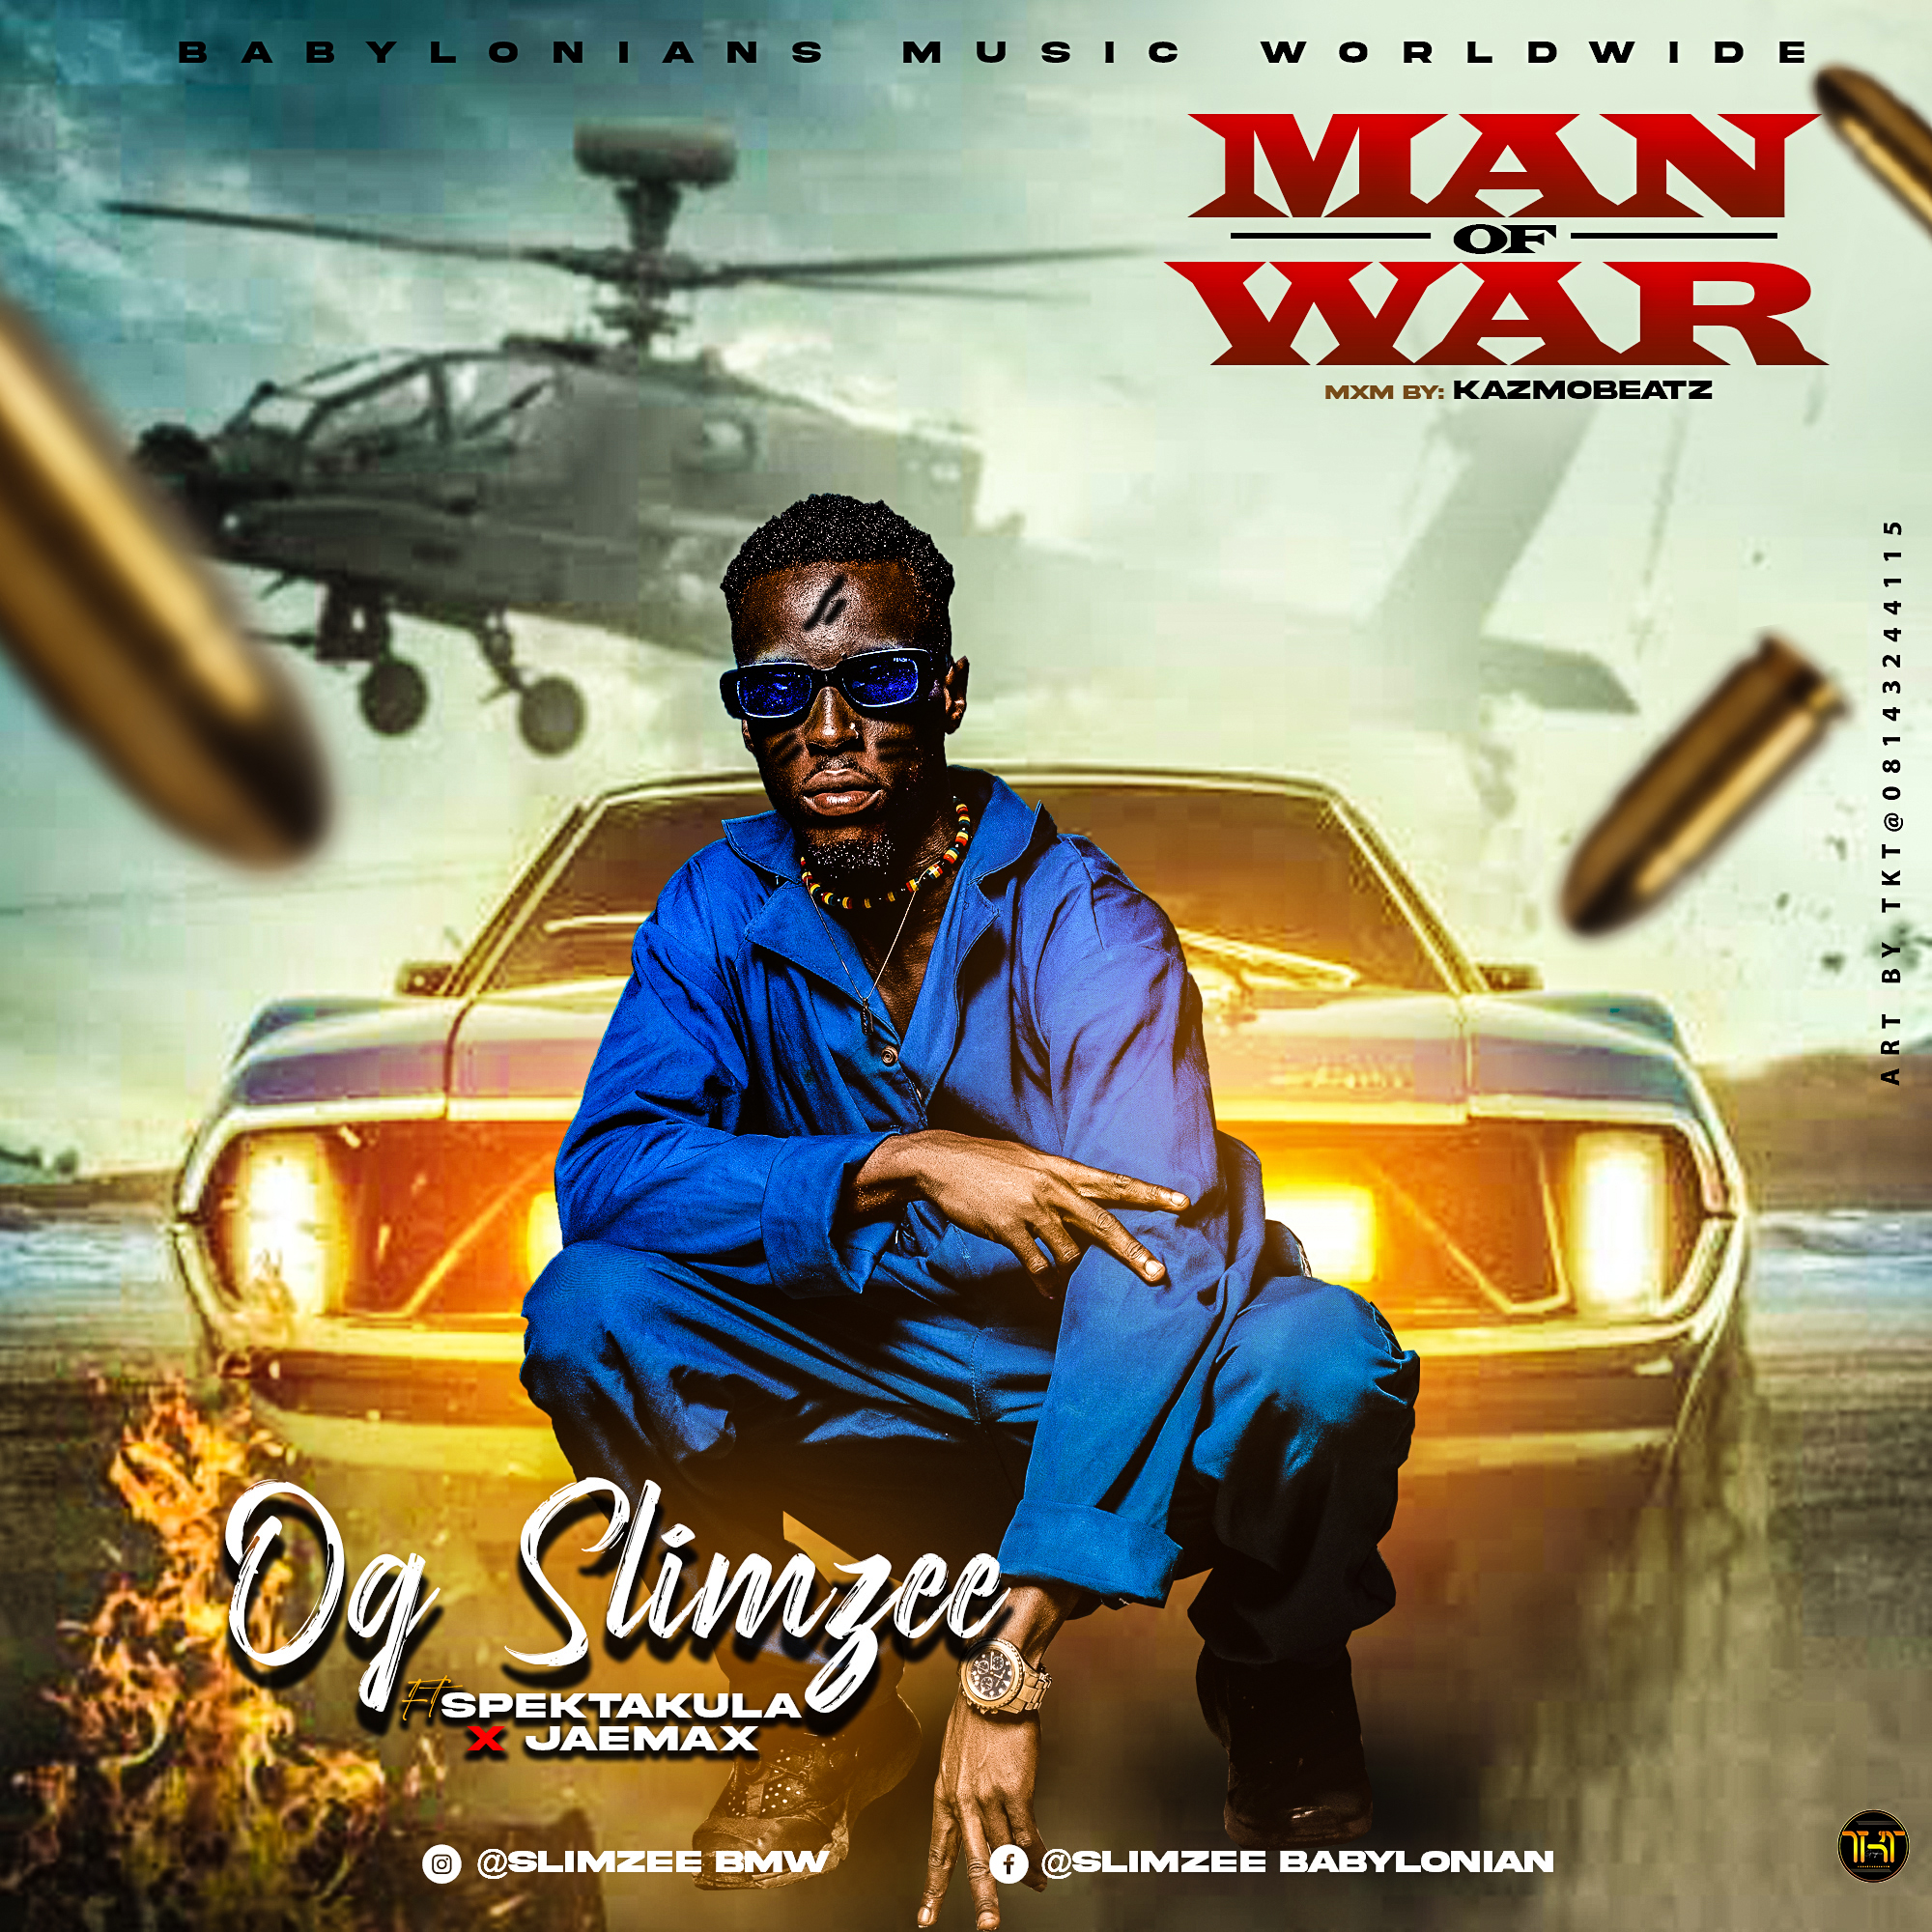 DOWNLOAD MUSIC: OG Slimzee – Man Of War Ft Spektakula X Jaemax